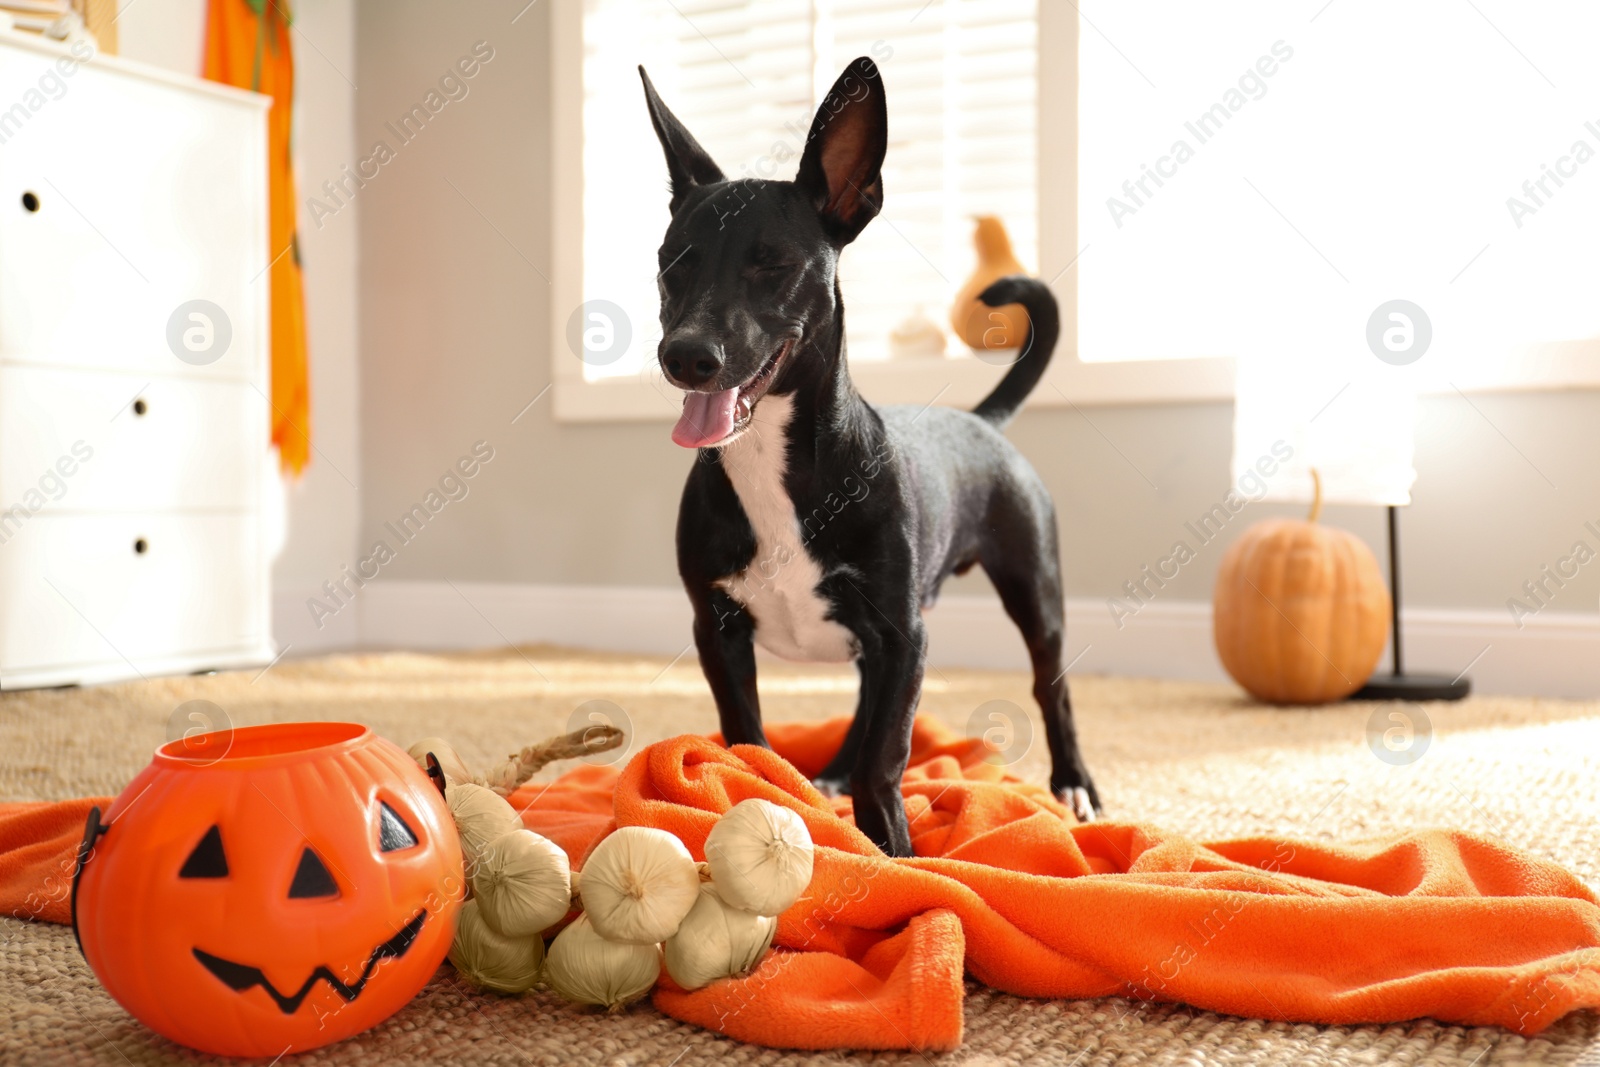 Photo of Cute black dog with orange blanket and Halloween treat bucket on floor indoors